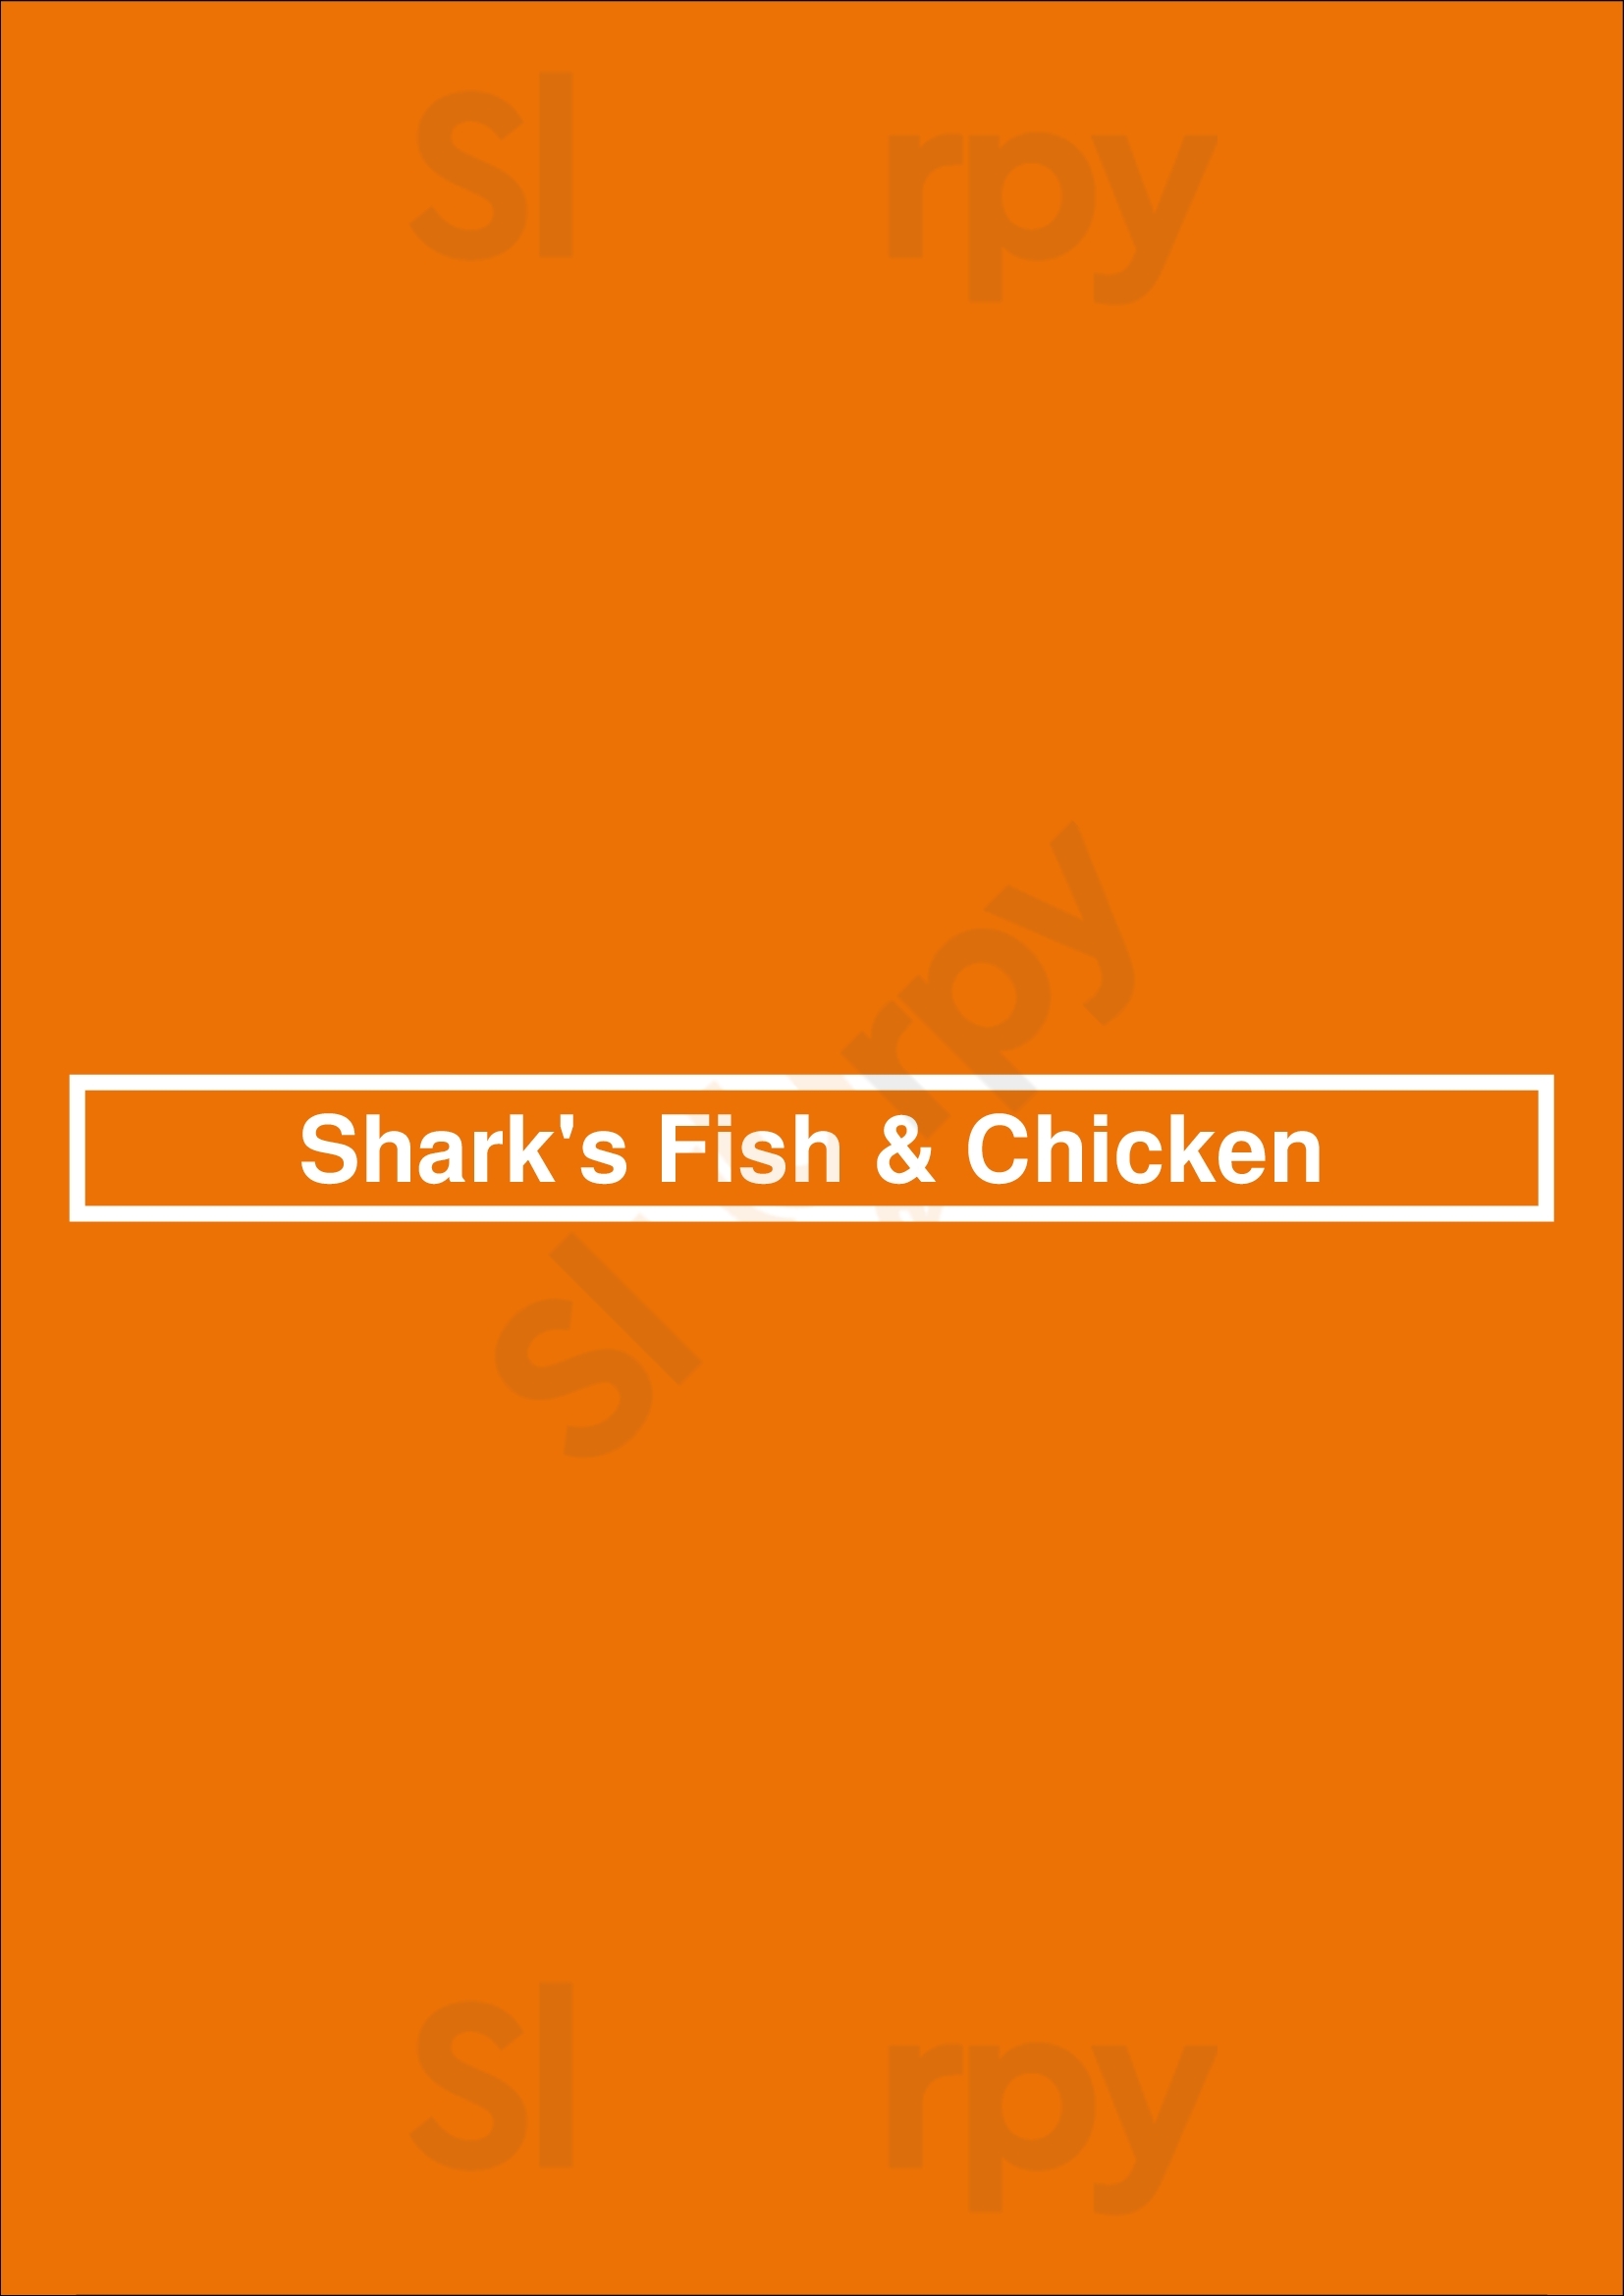 Shark's Fish & Chicken Chicago Menu - 1